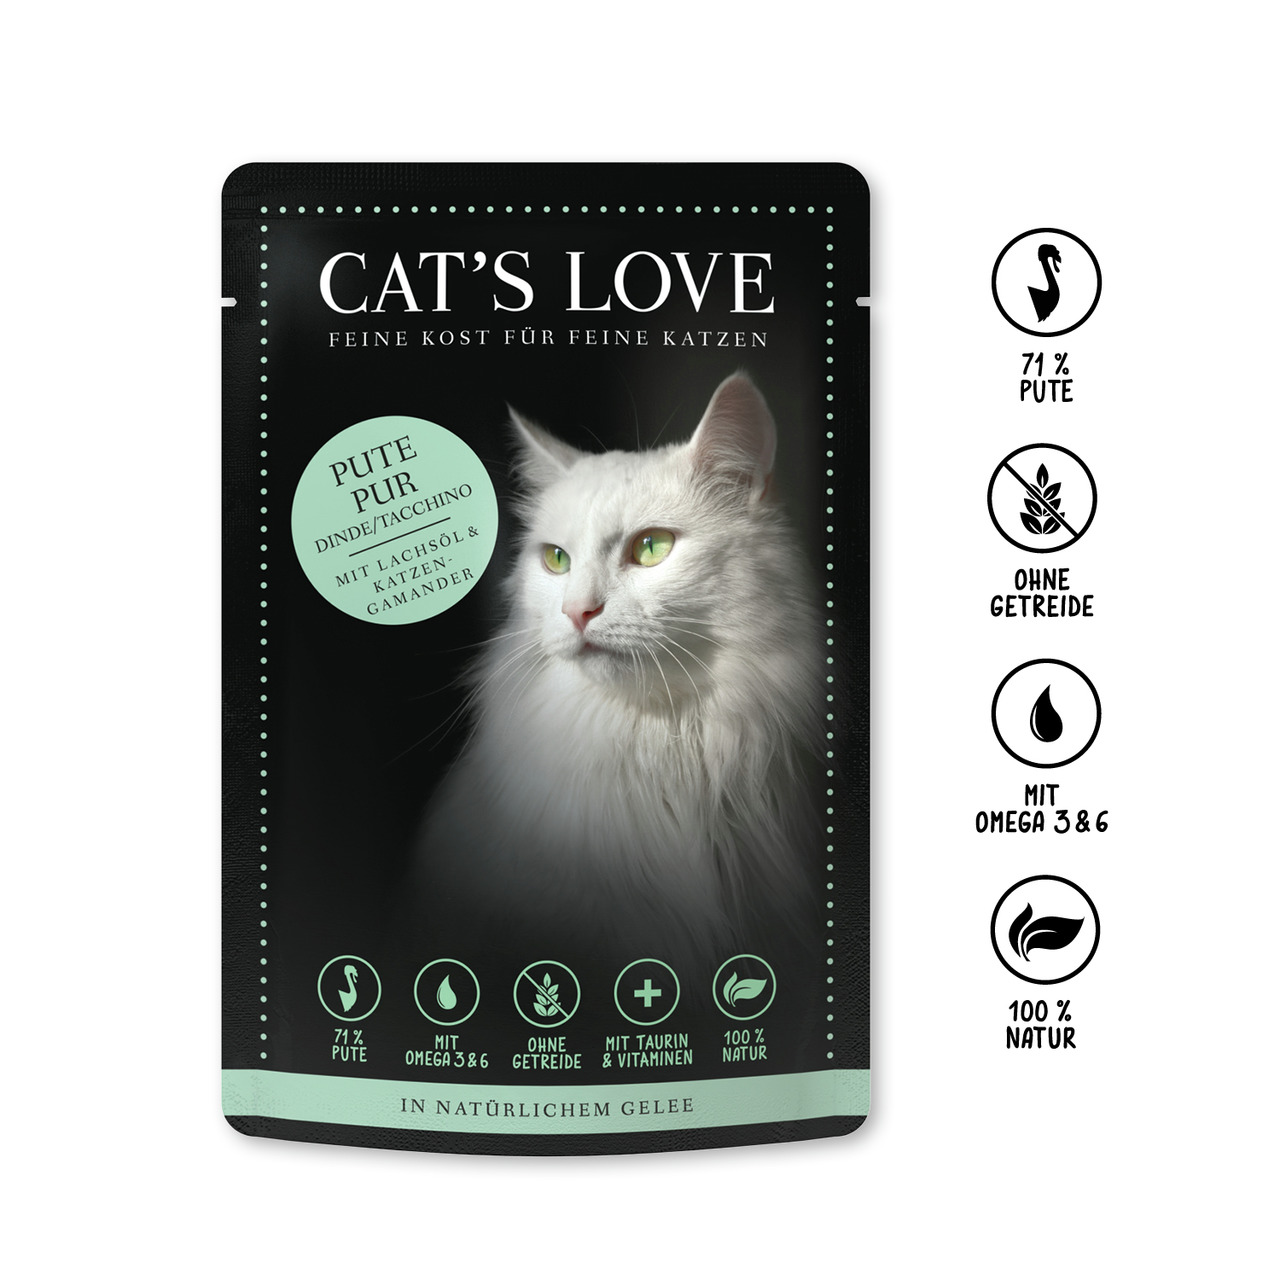 Cat's Love Adult Pute pur mit Lachsöl & Katzengamander Katzen Nassfutter 85 g